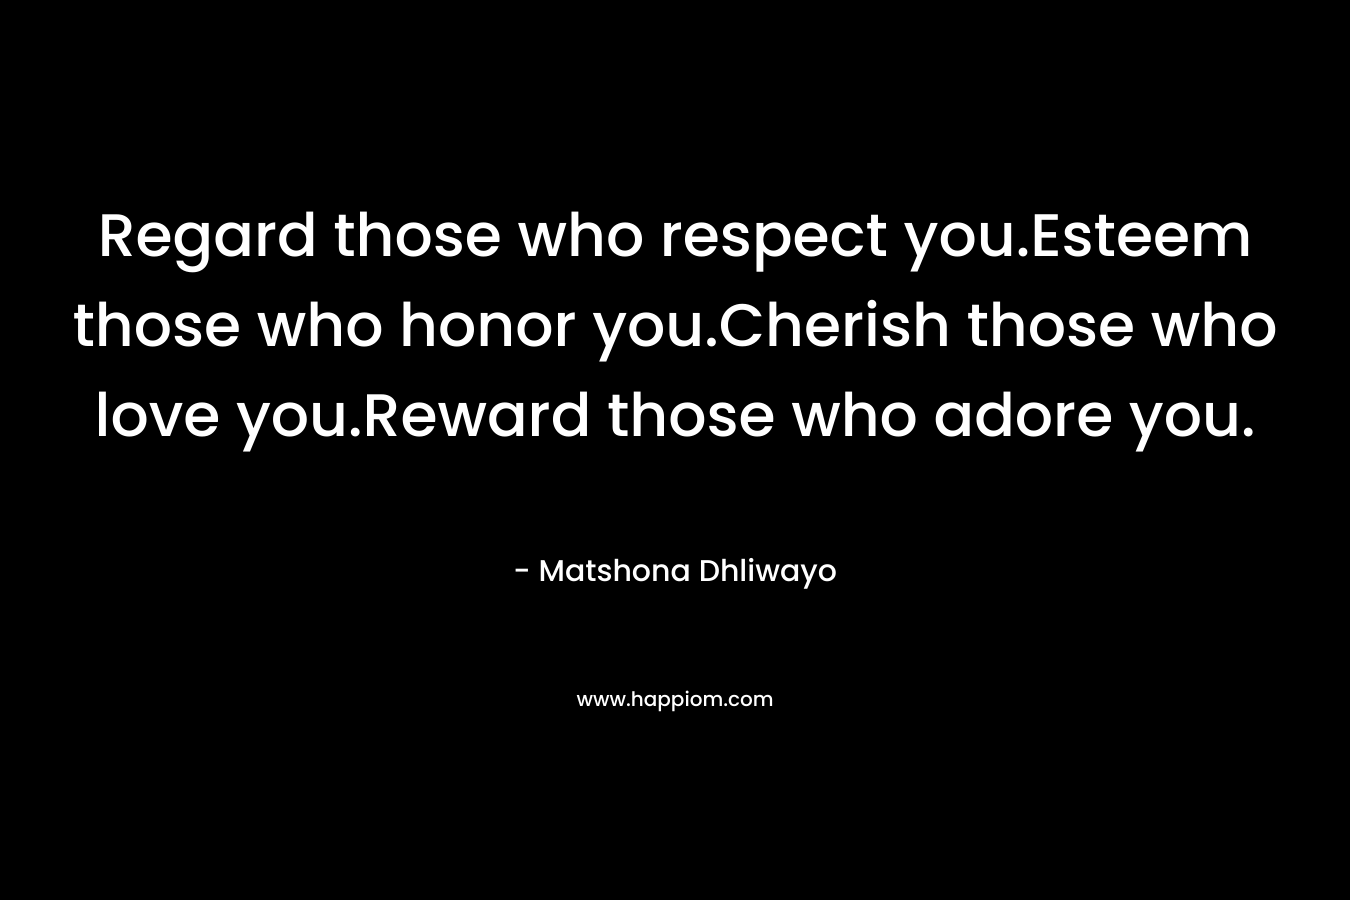 Regard those who respect you.Esteem those who honor you.Cherish those who love you.Reward those who adore you.